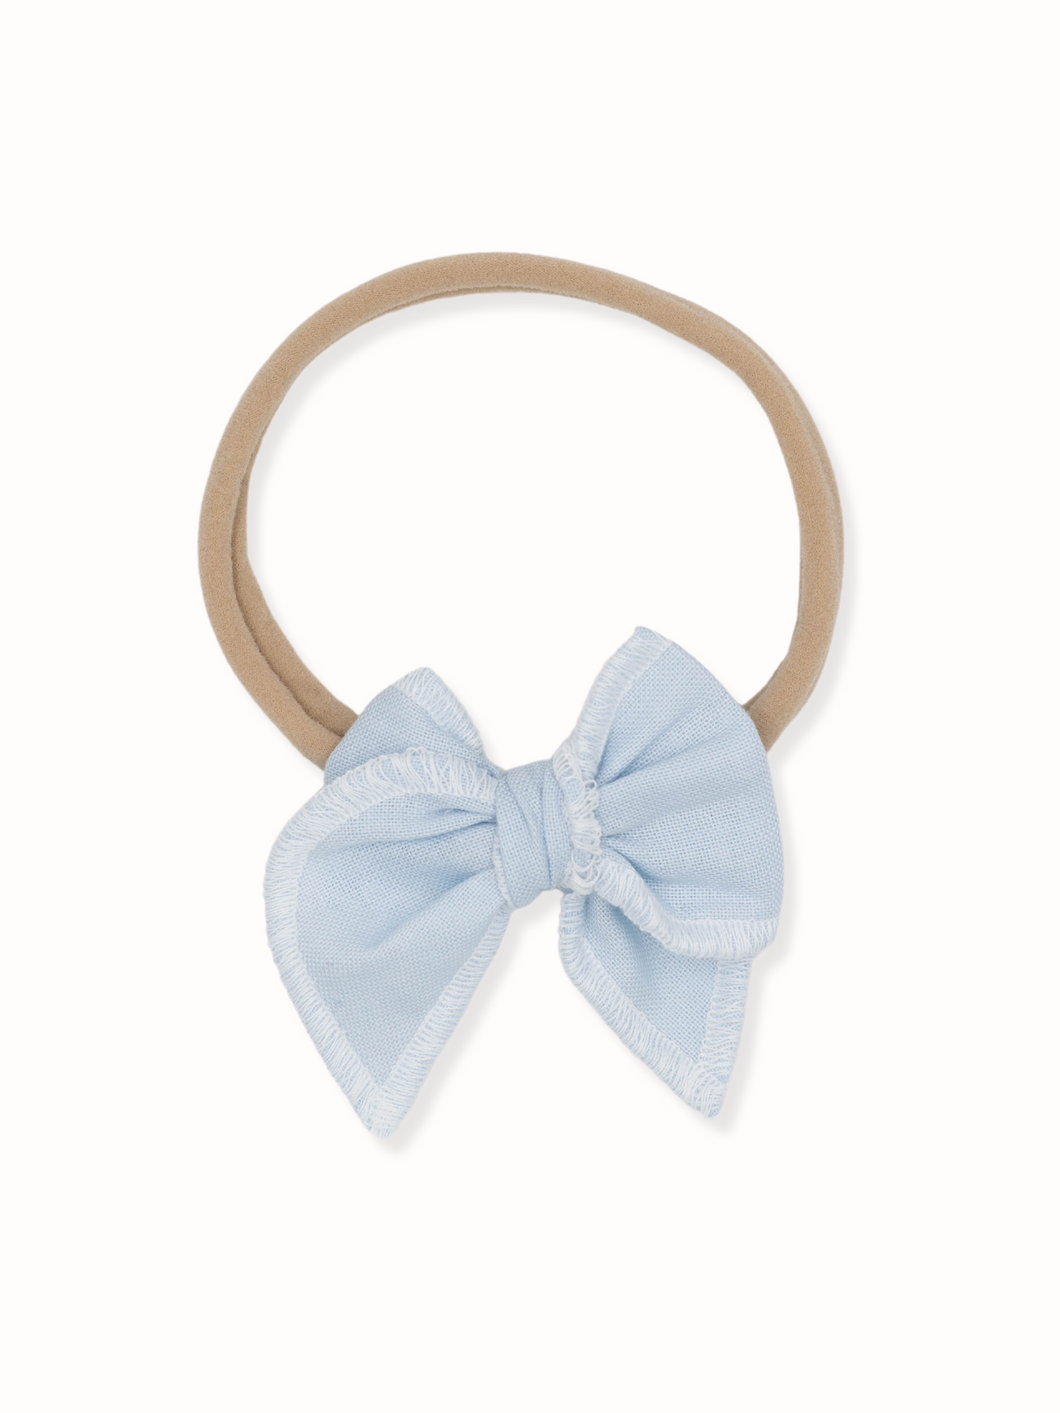 Cindy Organic Cotton Baby Bow headband in light powder blue organic cotton / Livy Lou Collection